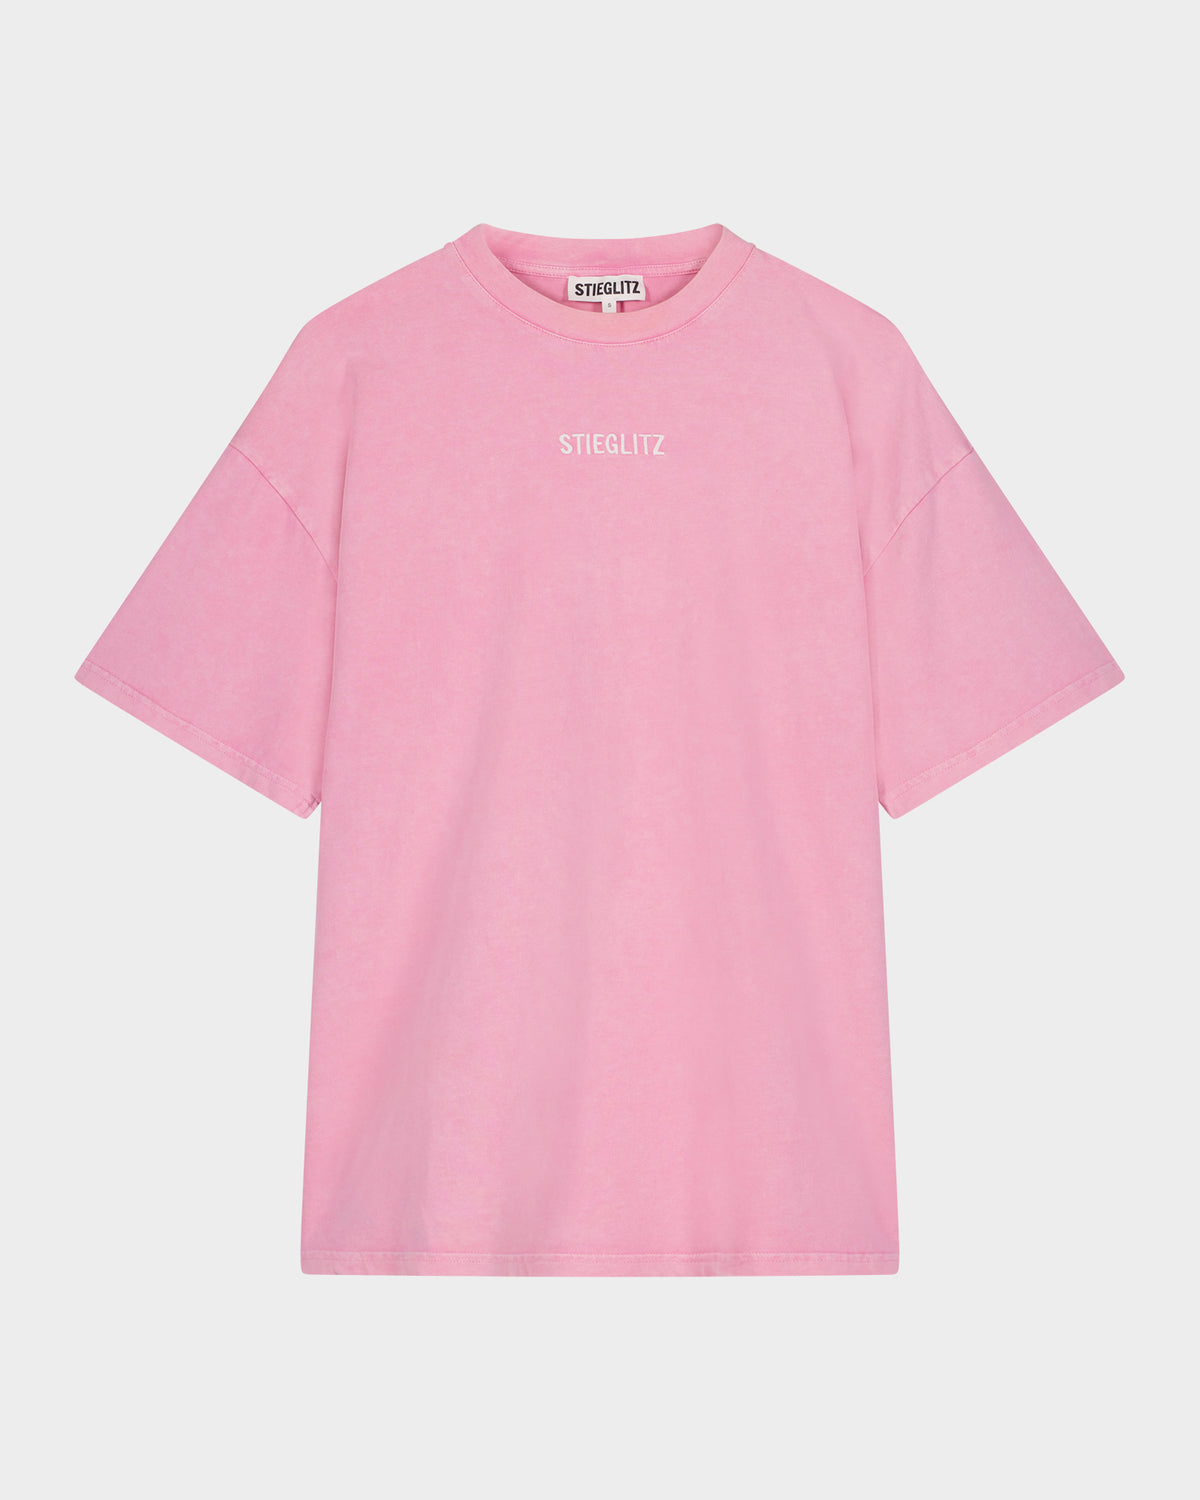 NOS Worn Out T-shirt Pink